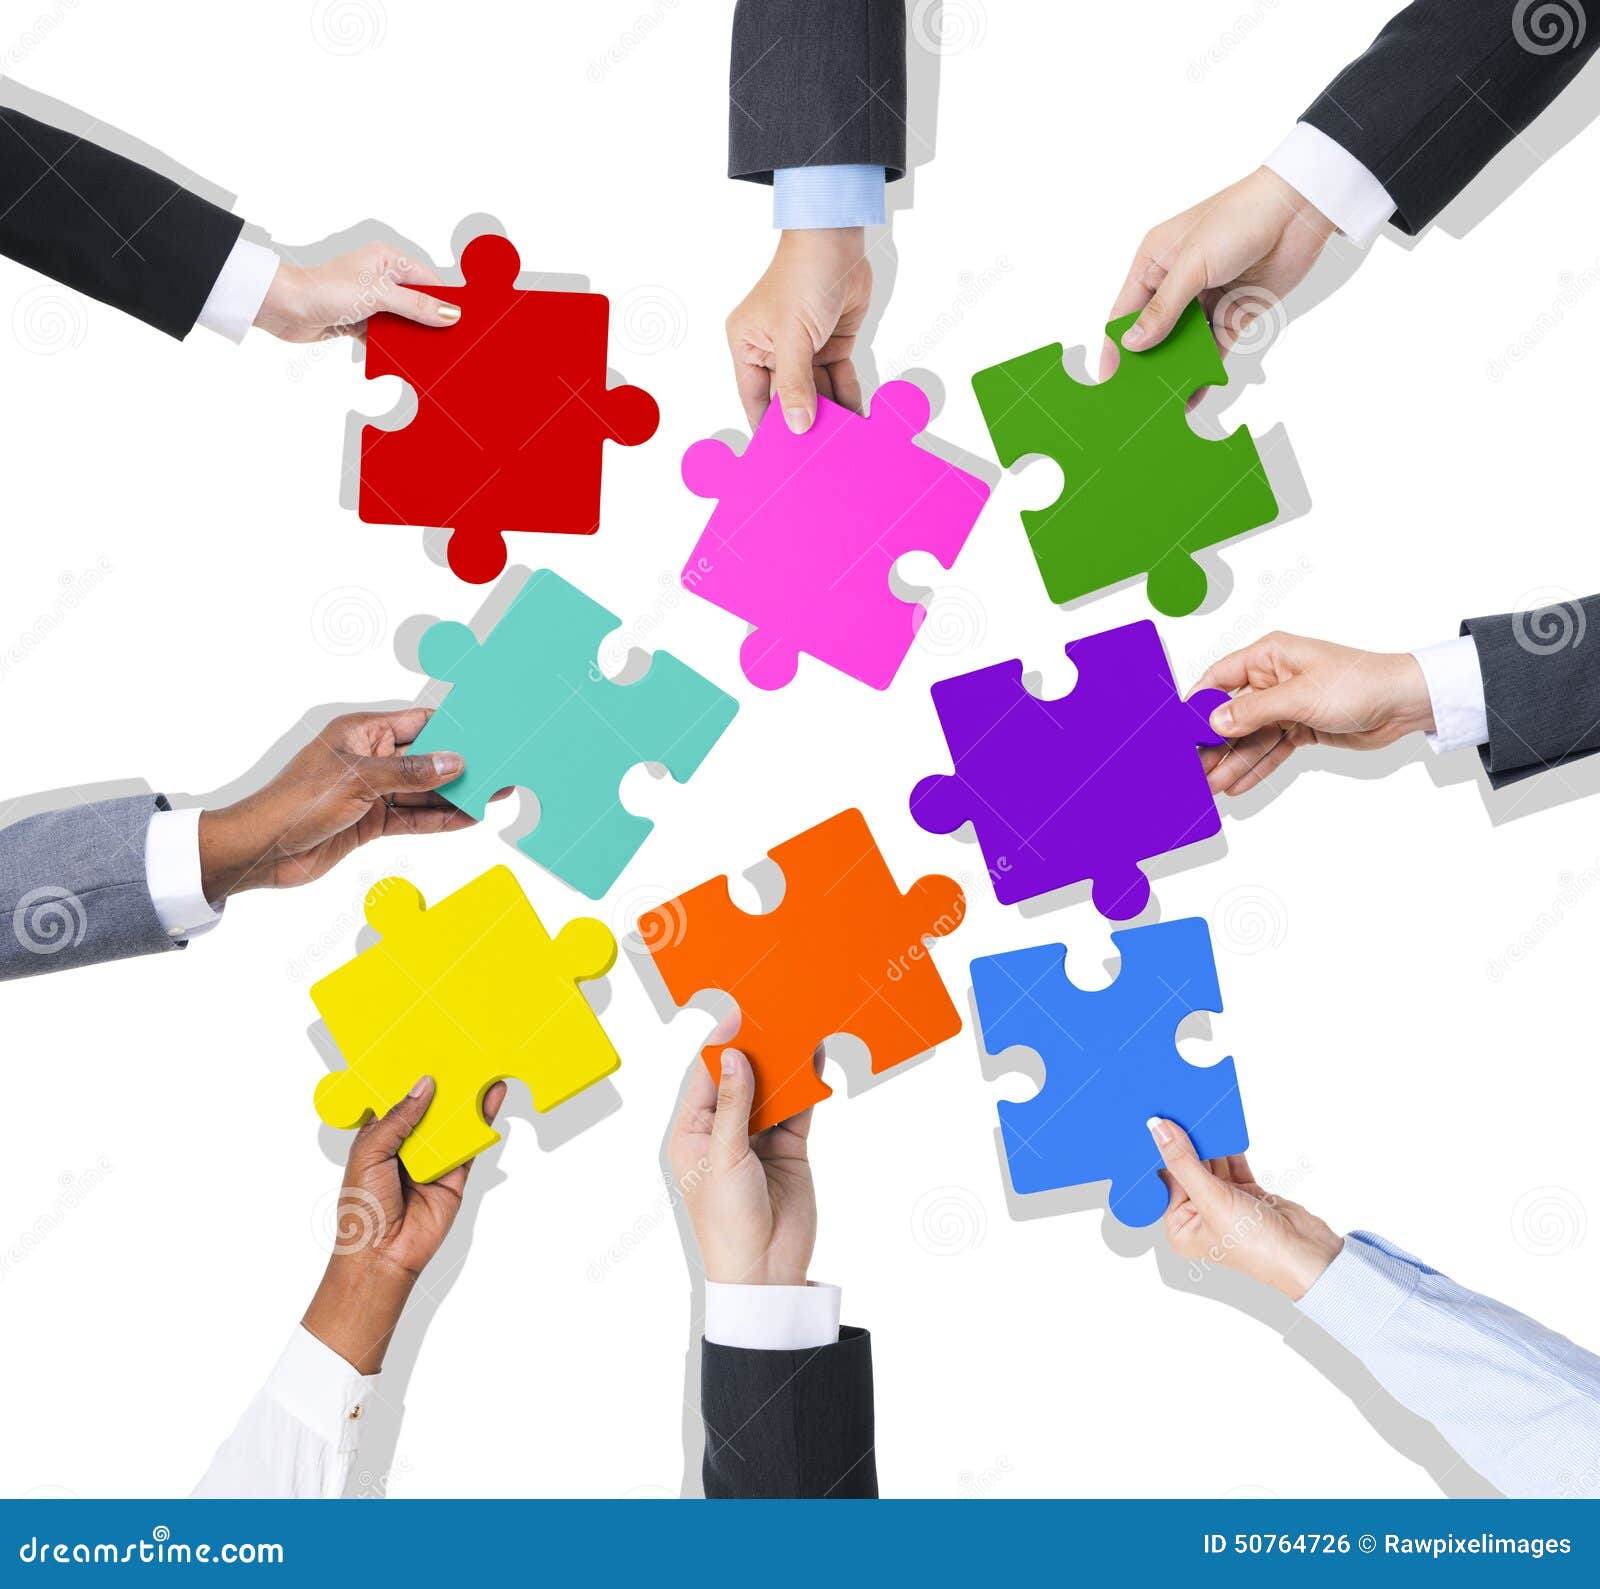 business teamwork collaboration connection concept